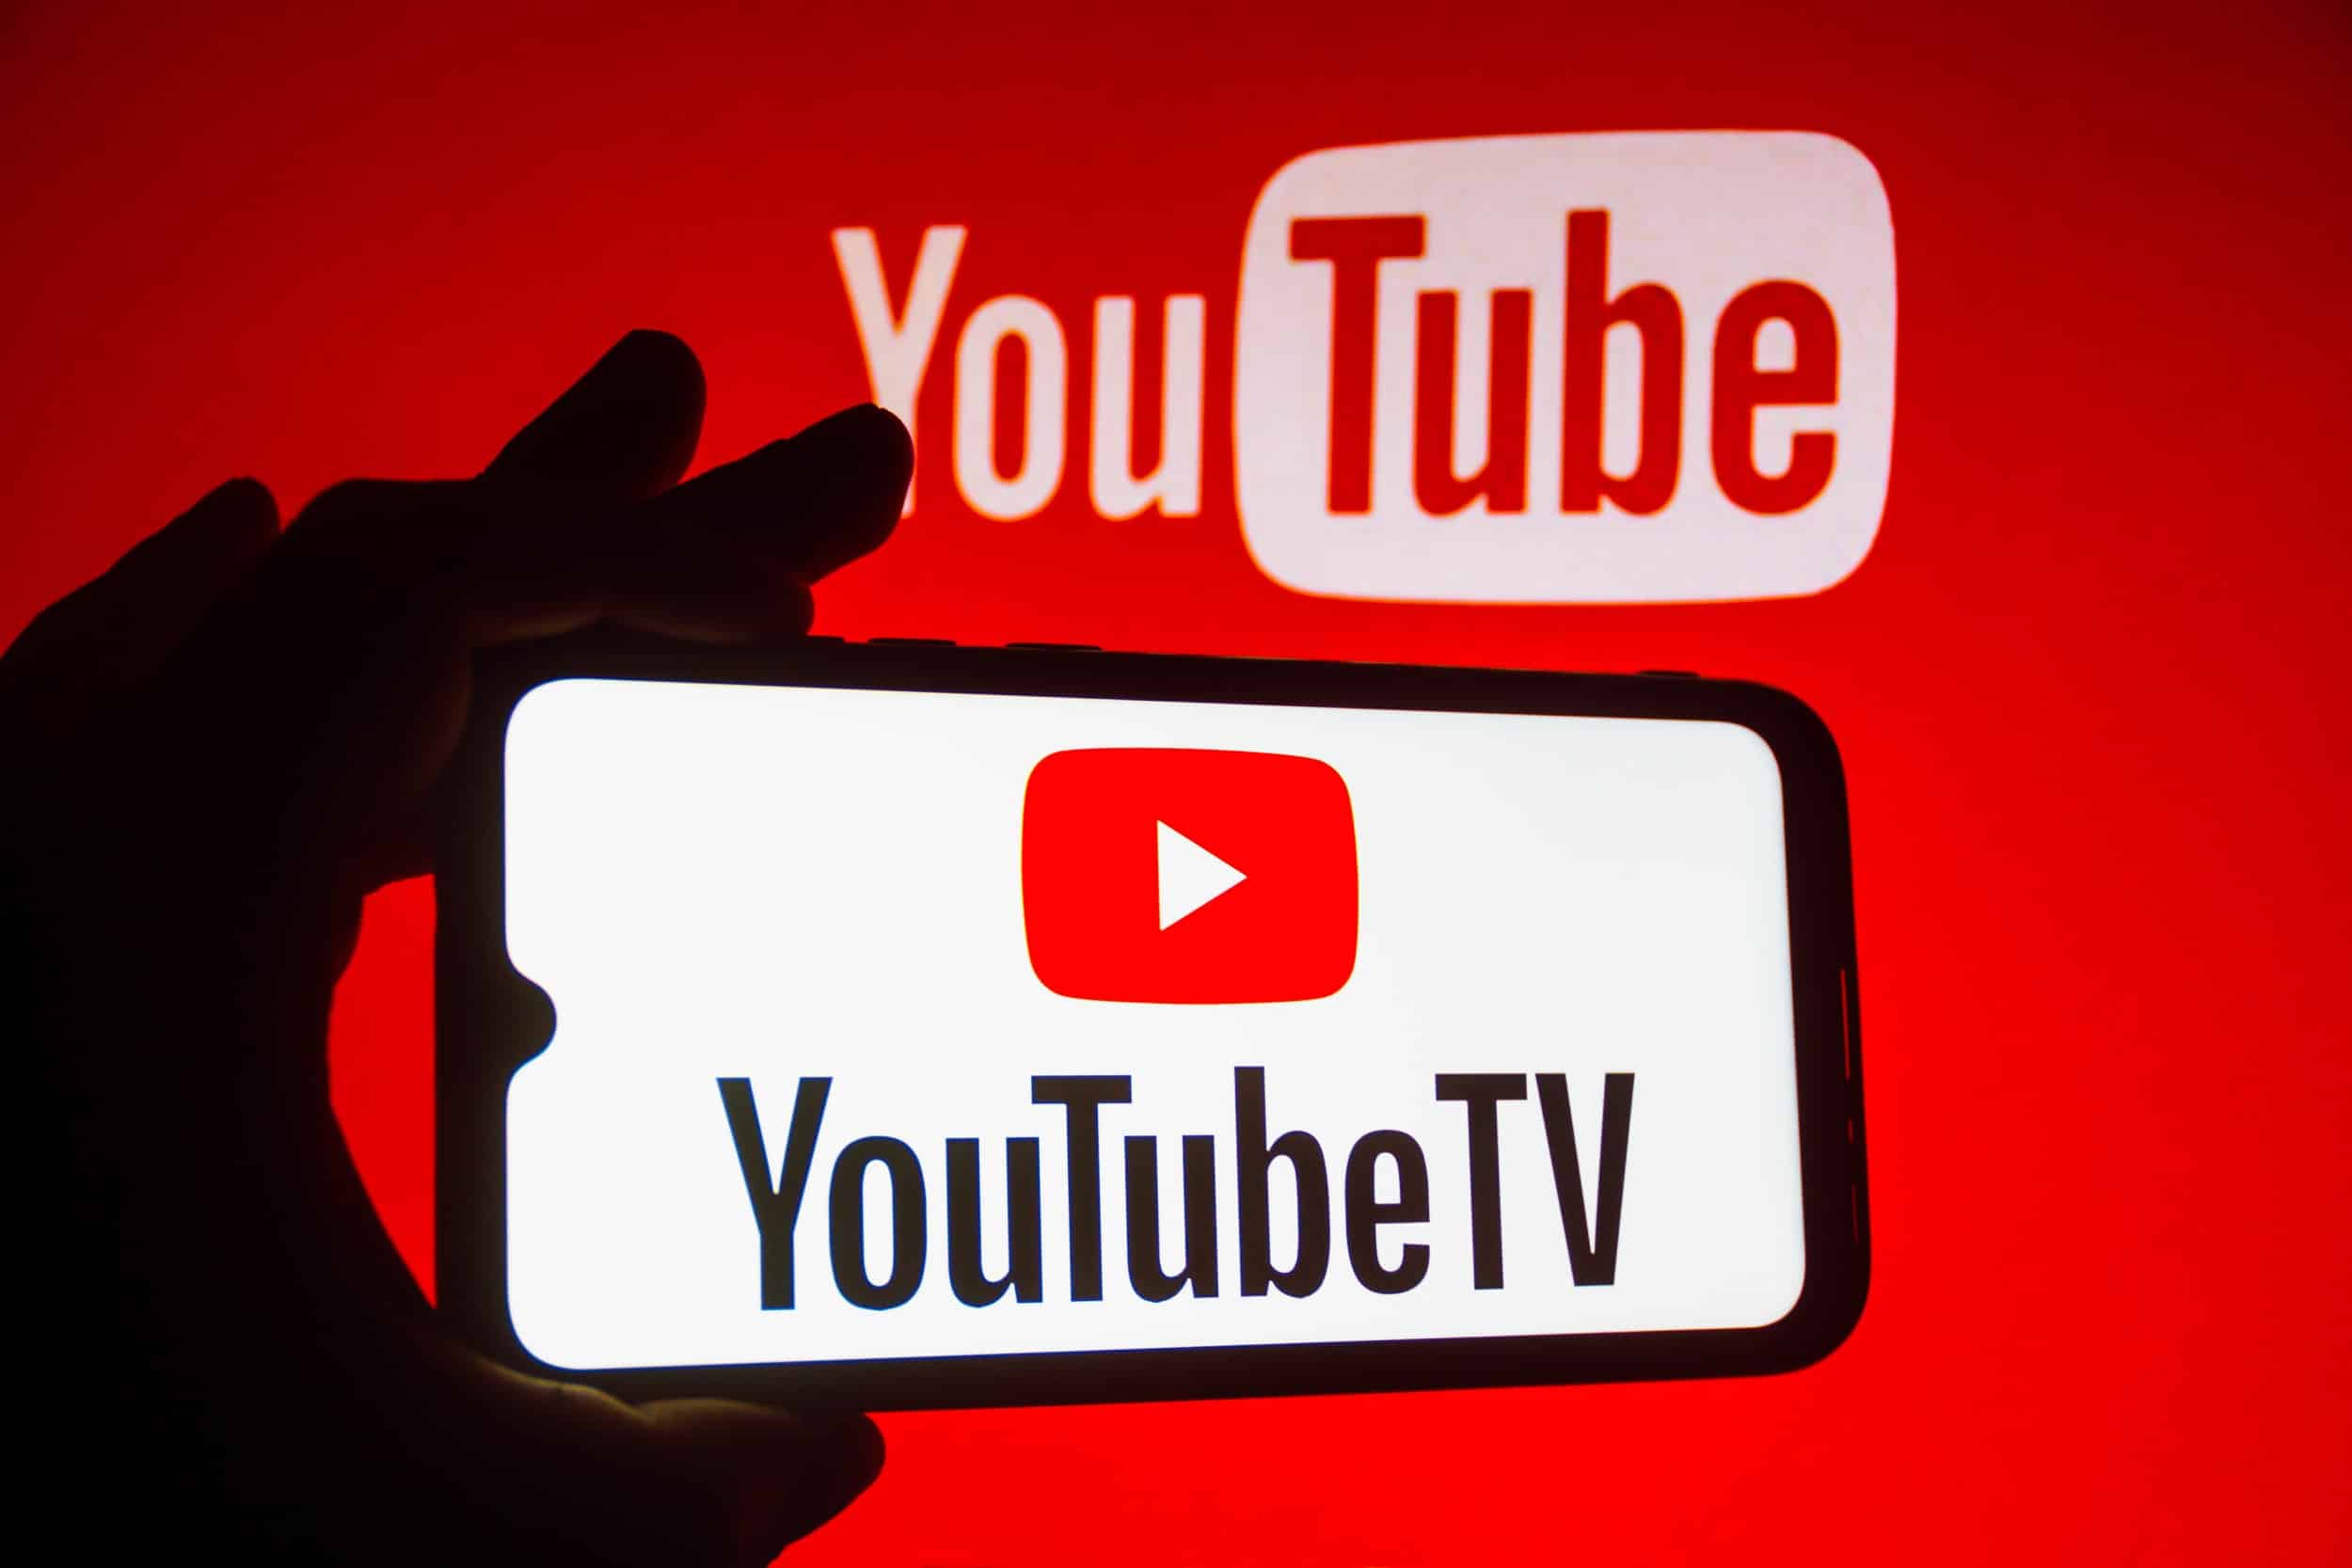 YouTube 73 $, Άνοδος για την τιμή του YouTube TV – Στα 73 $ τον μήνα